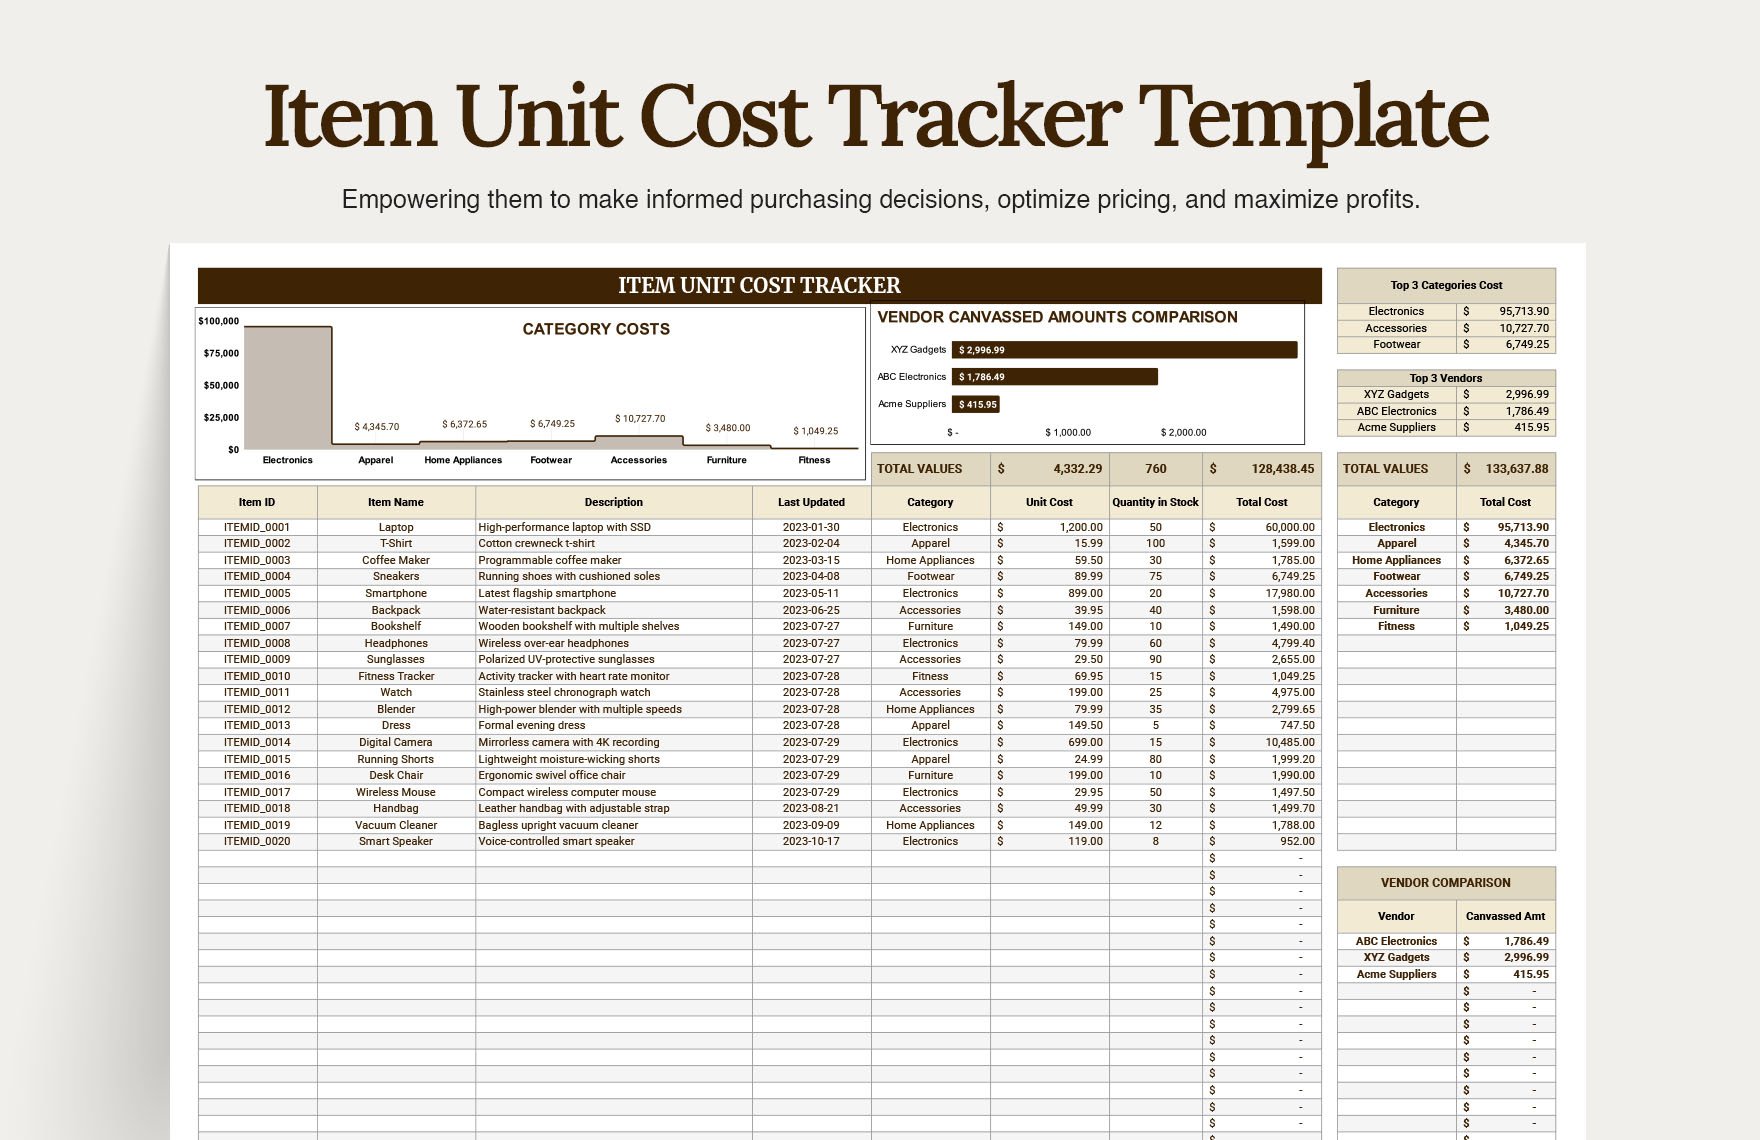 Item Unit Cost Tracker Template